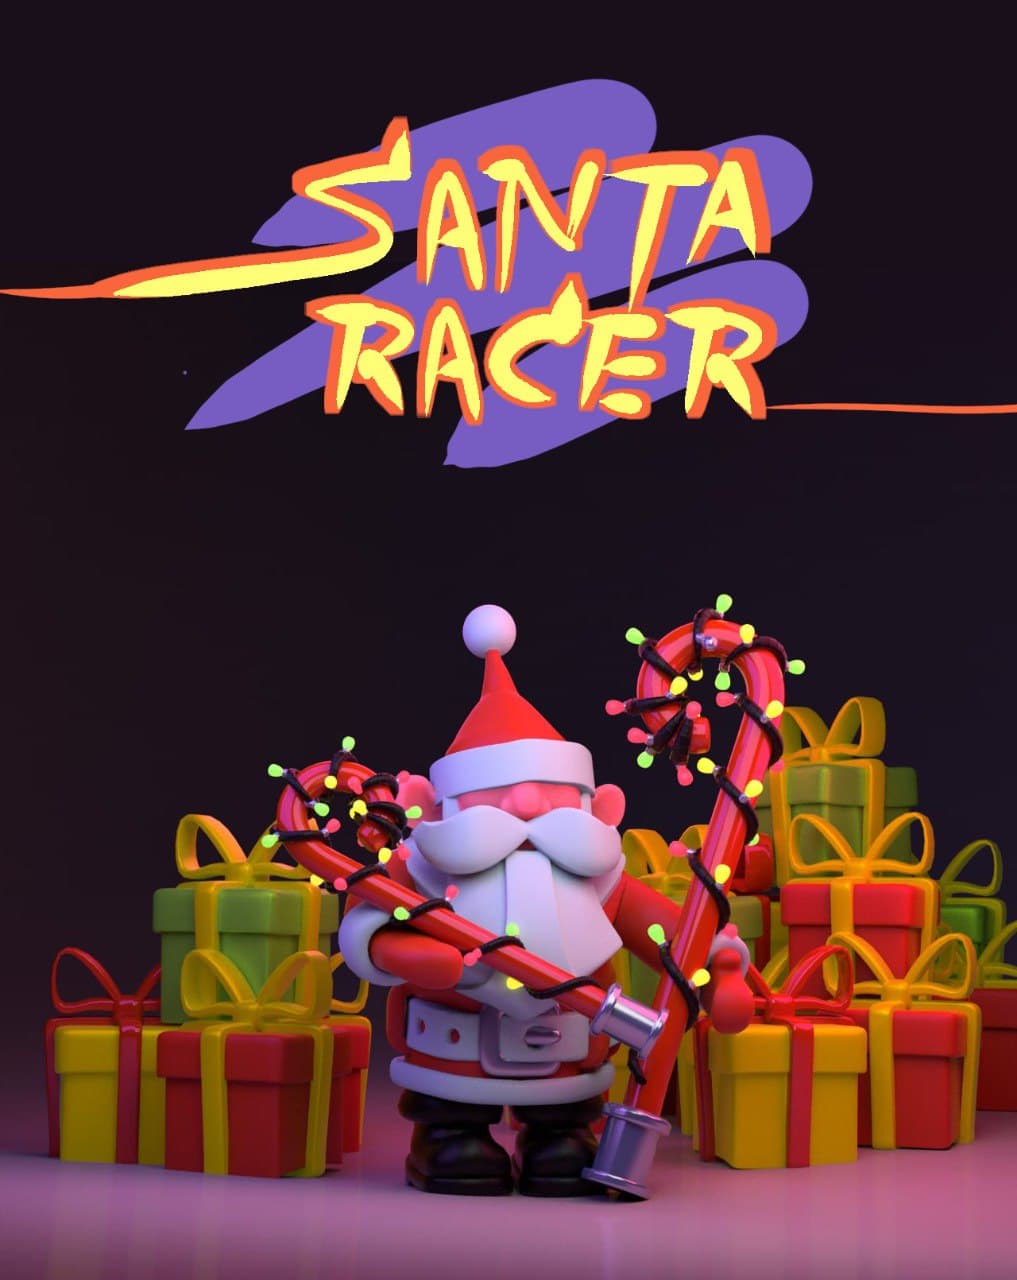 Scarica Santa Racer - Christmas 2022 gratis per Android.